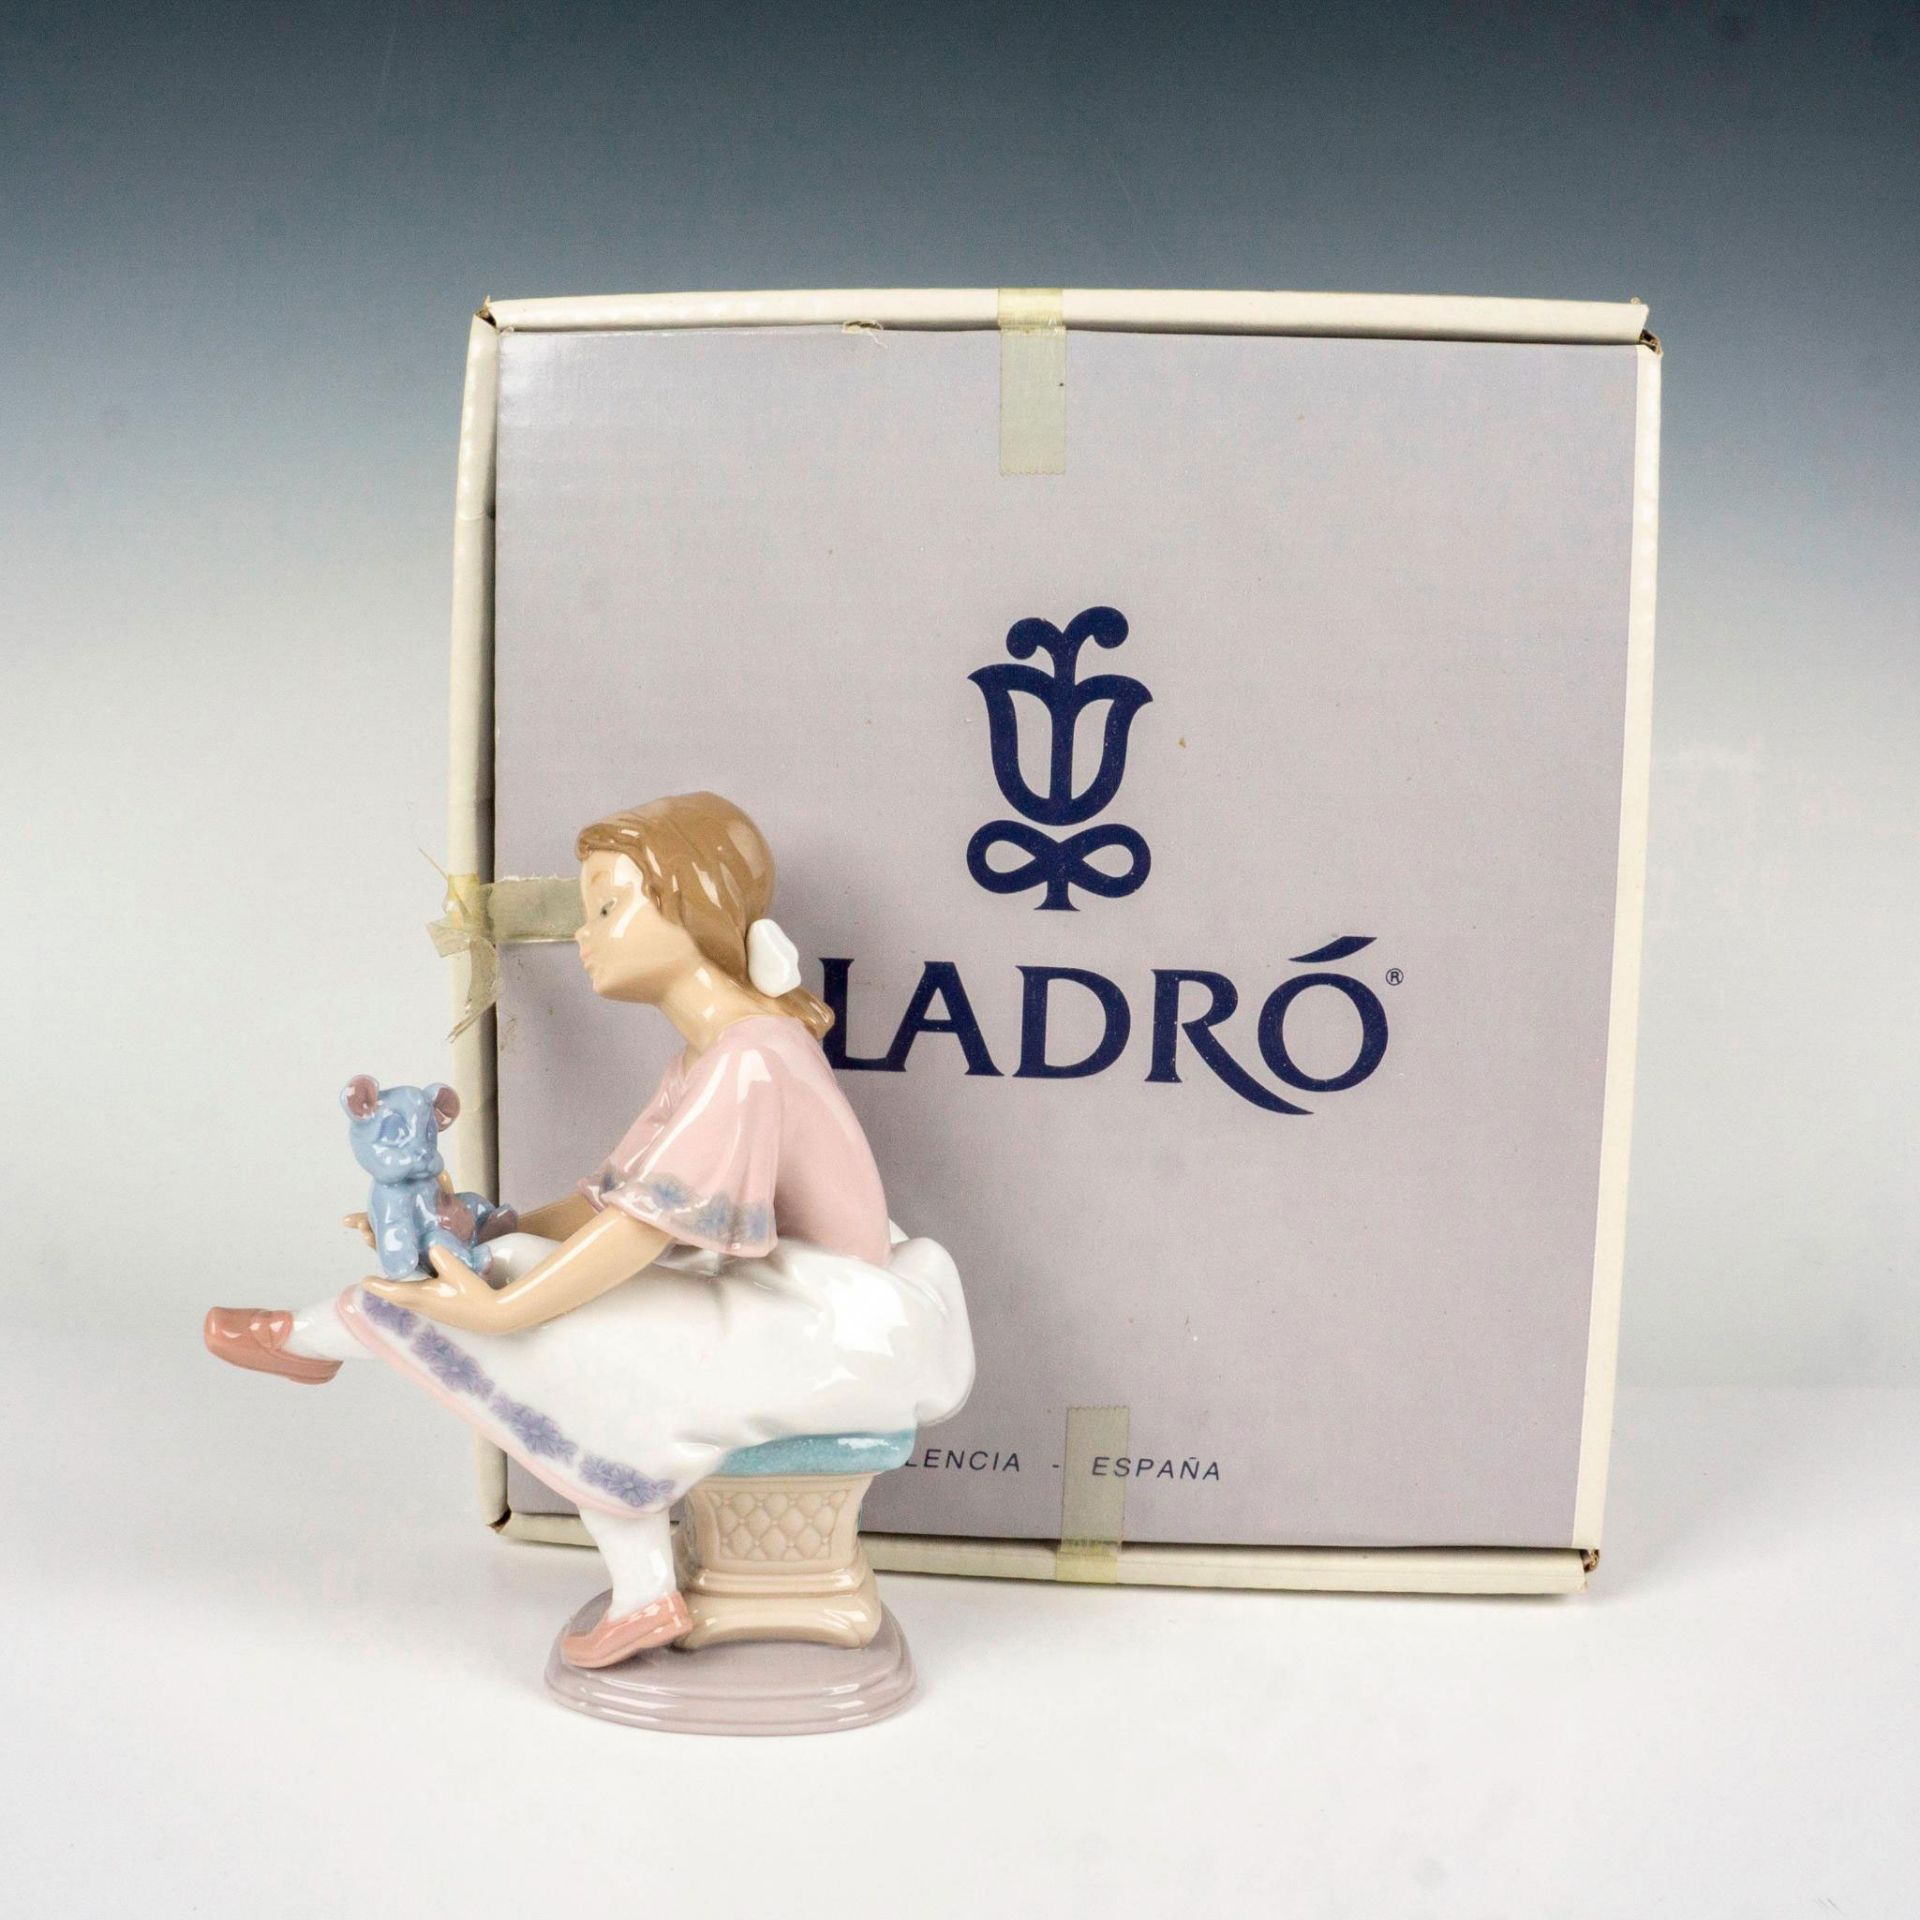 Best Friend 1007620 - Lladro Porcelain Figurine - Image 4 of 4